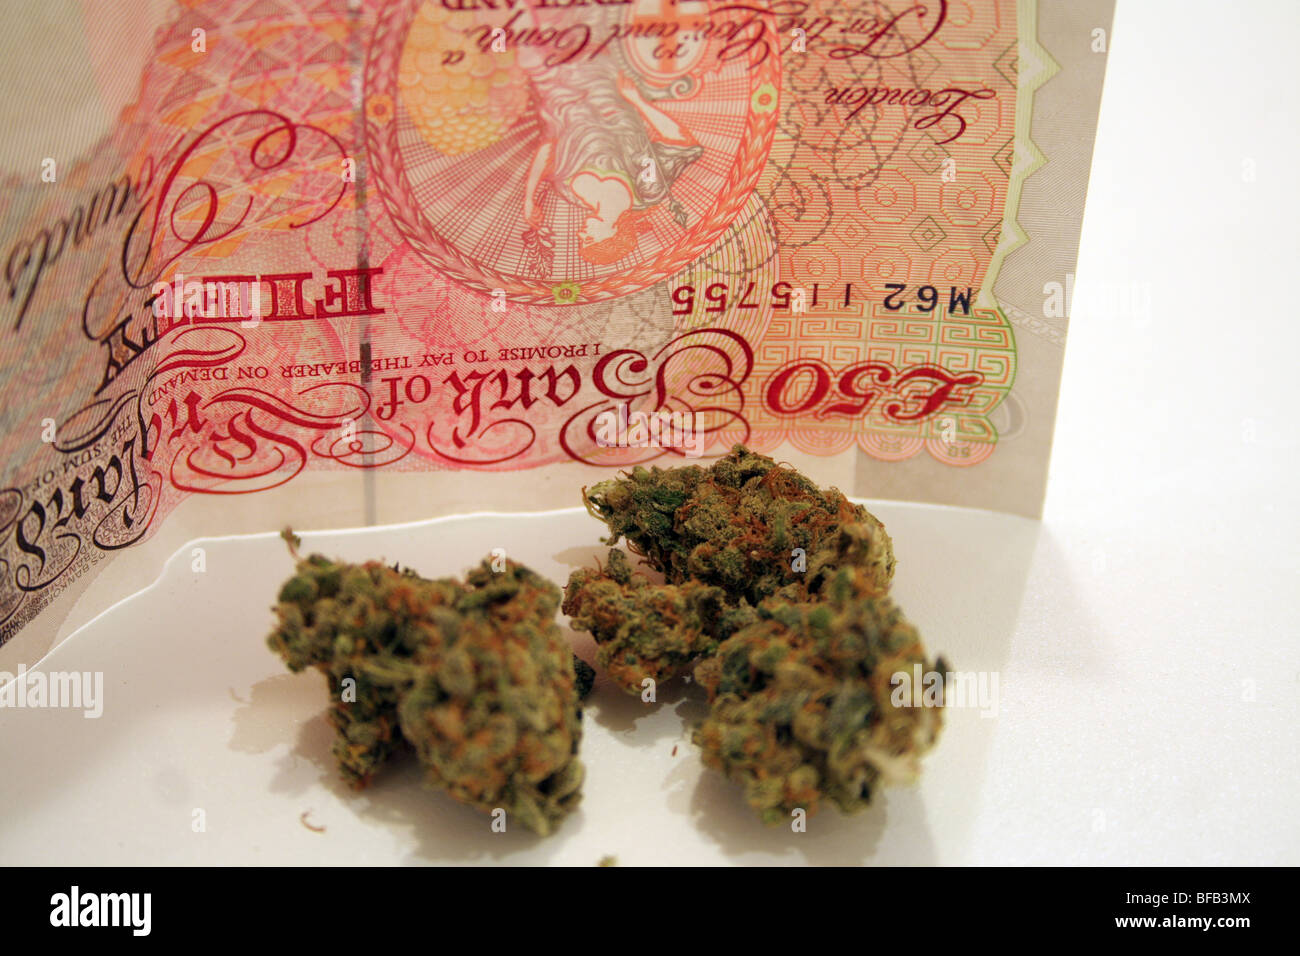 Skunk marijuana and £50 note Stock Photo